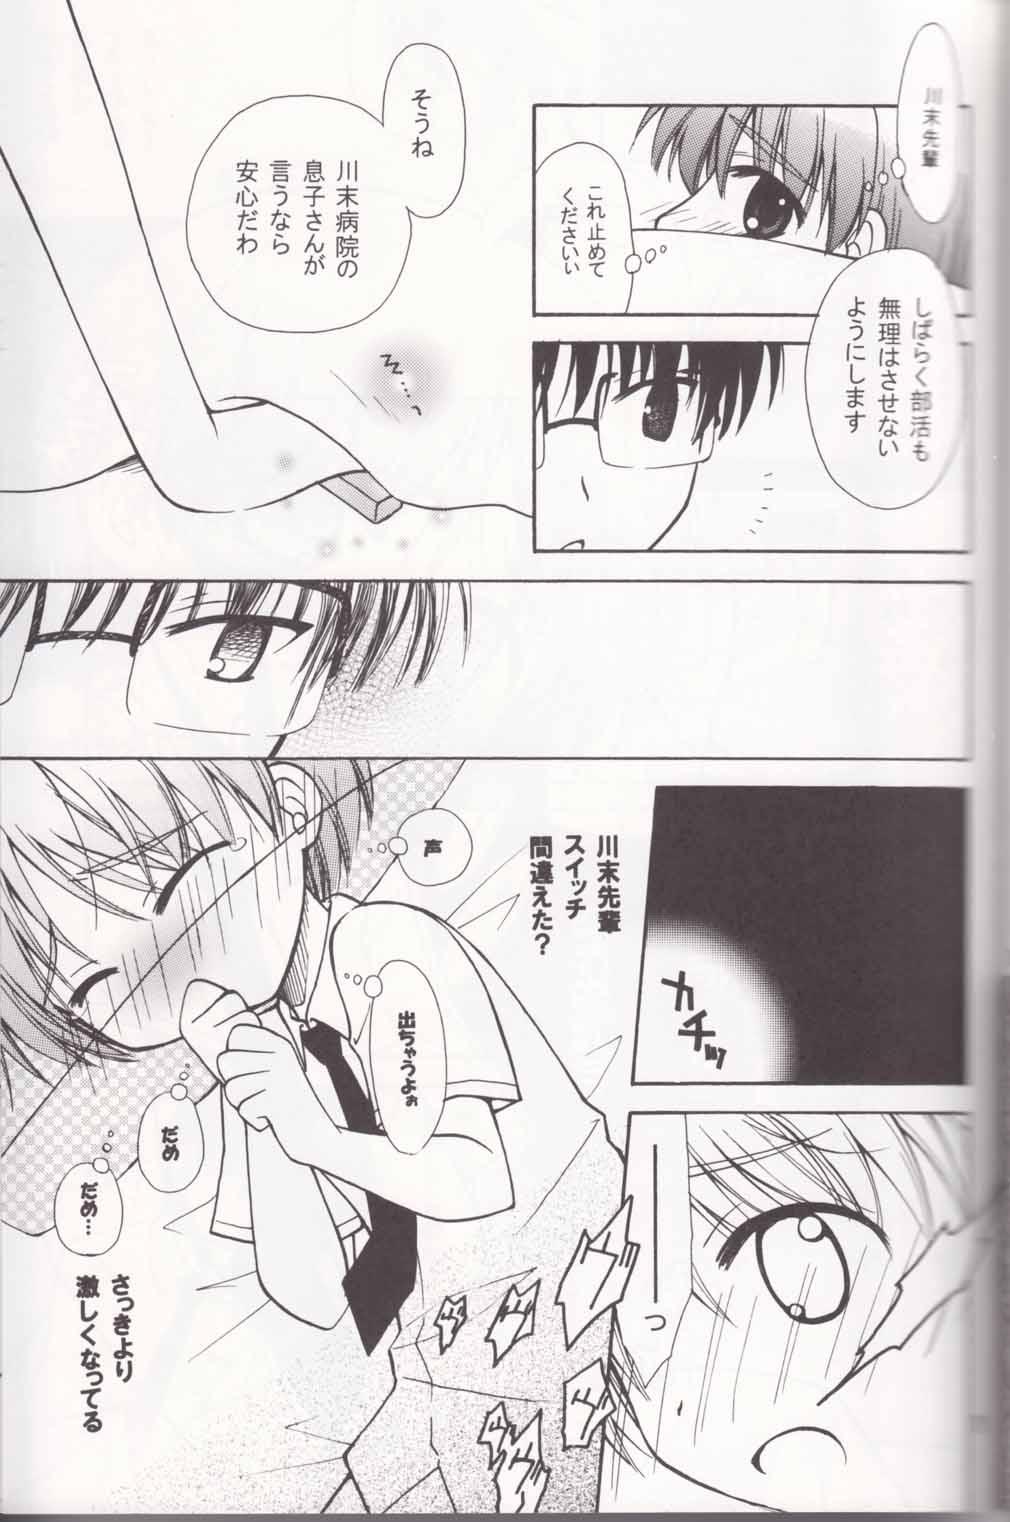 Rough Sex Boku no Sensei. - P2 lets play pingpong Shot - Page 11